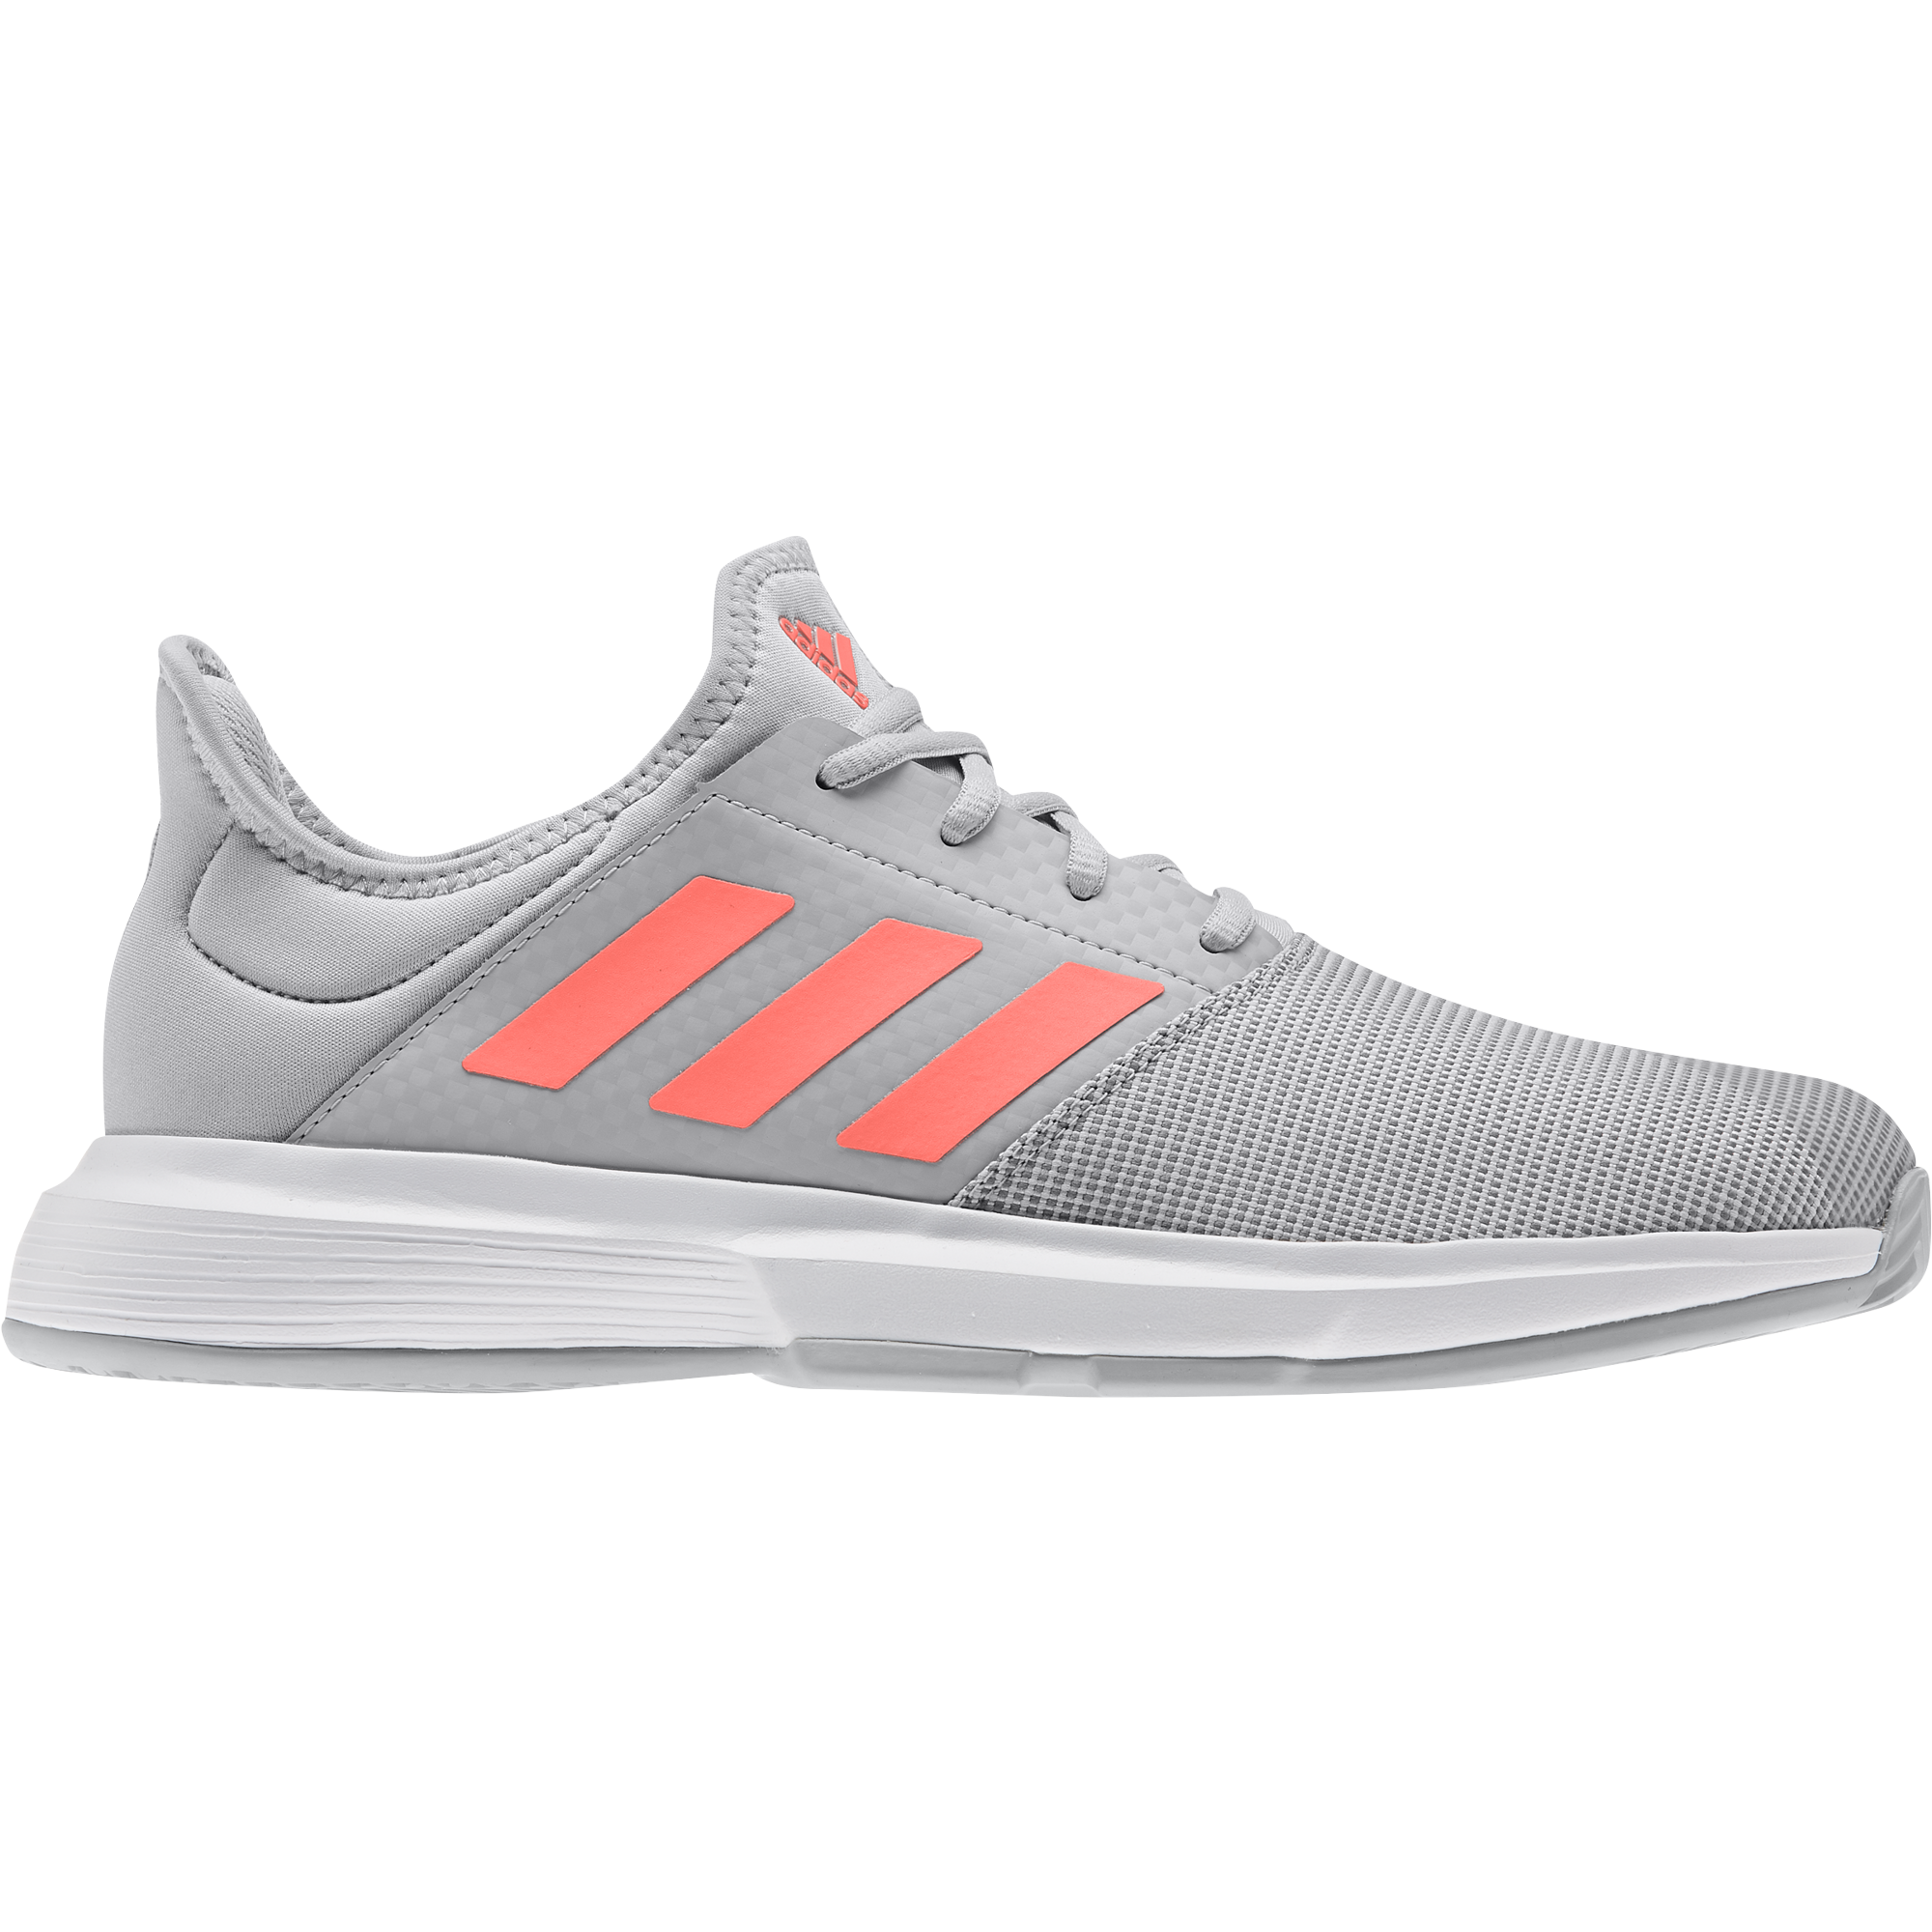 adidas tennis shoes grey